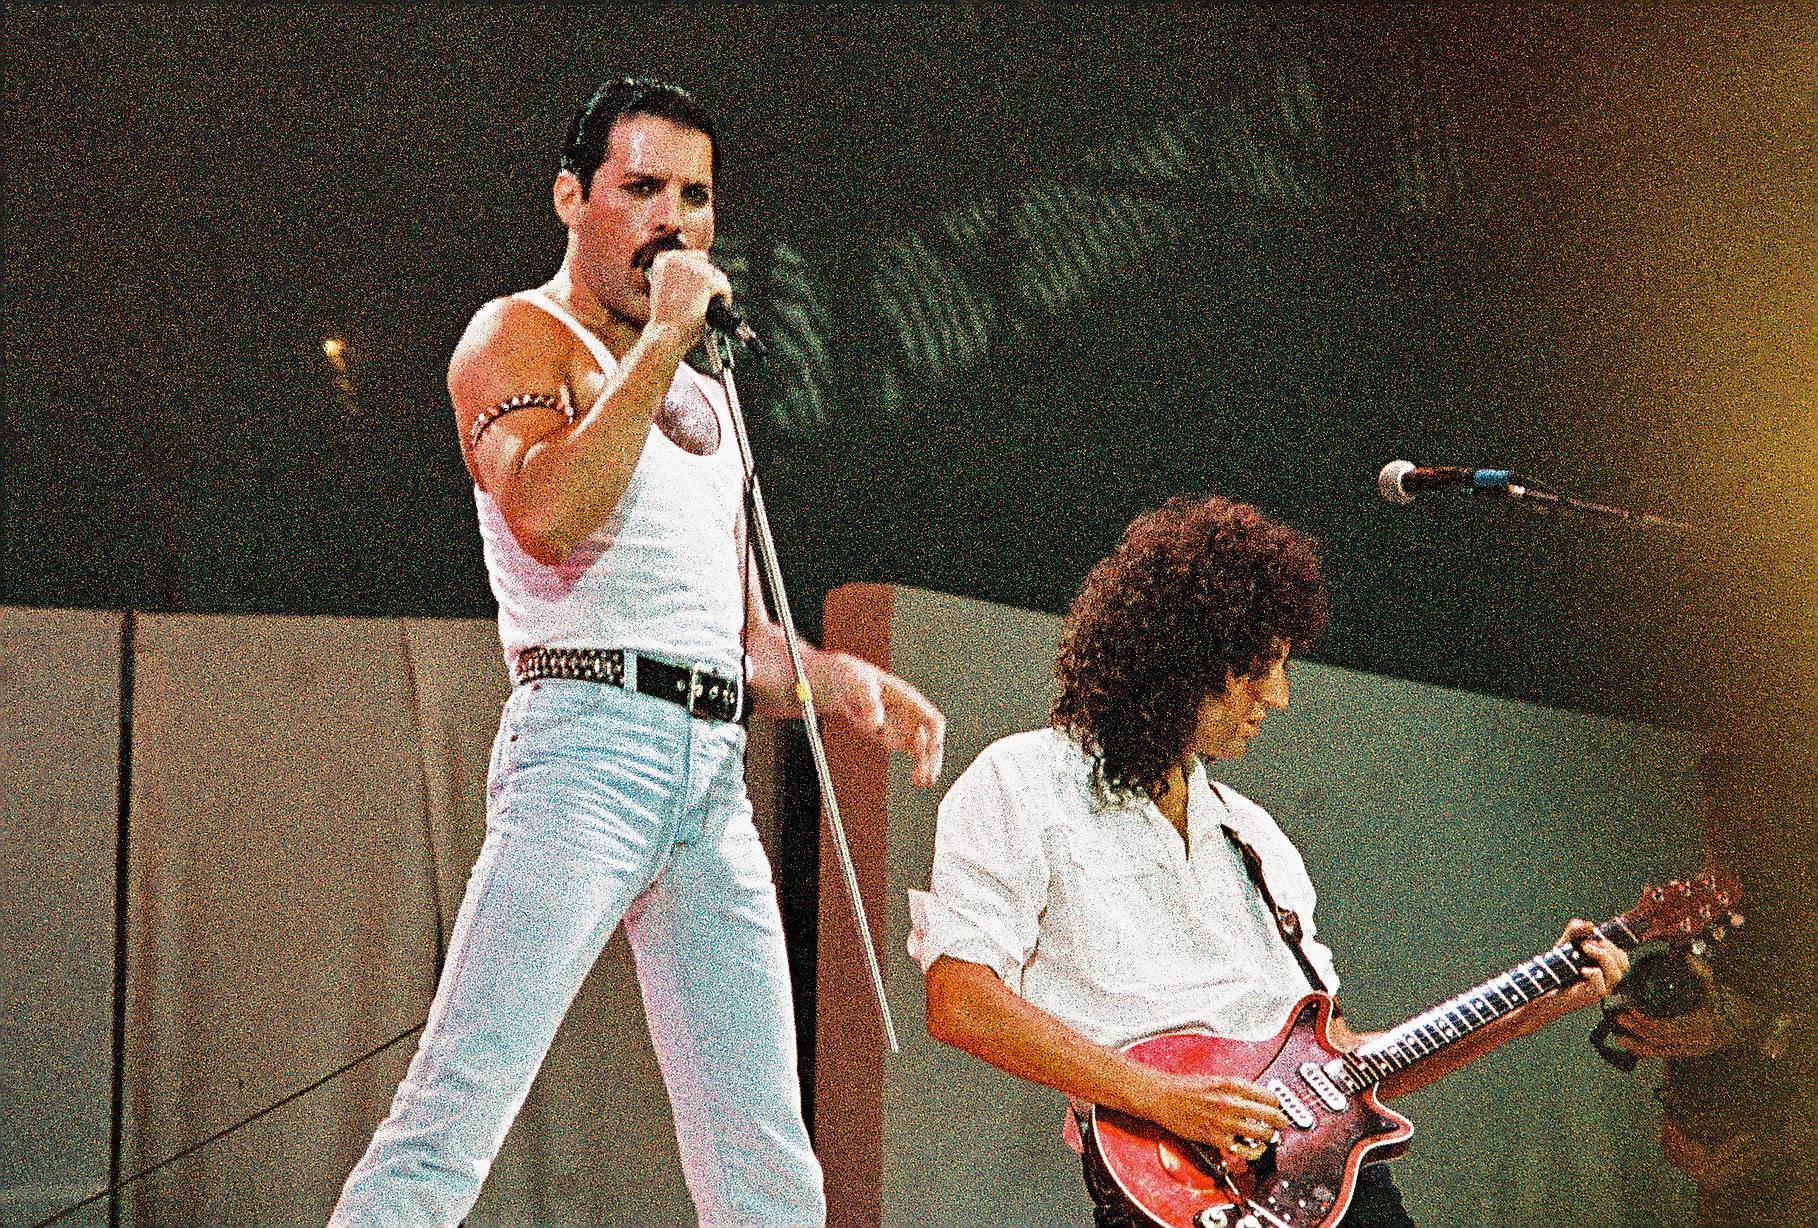 Queen Photos  Queen, Music, Freddie Mercury, Brian May, Roger